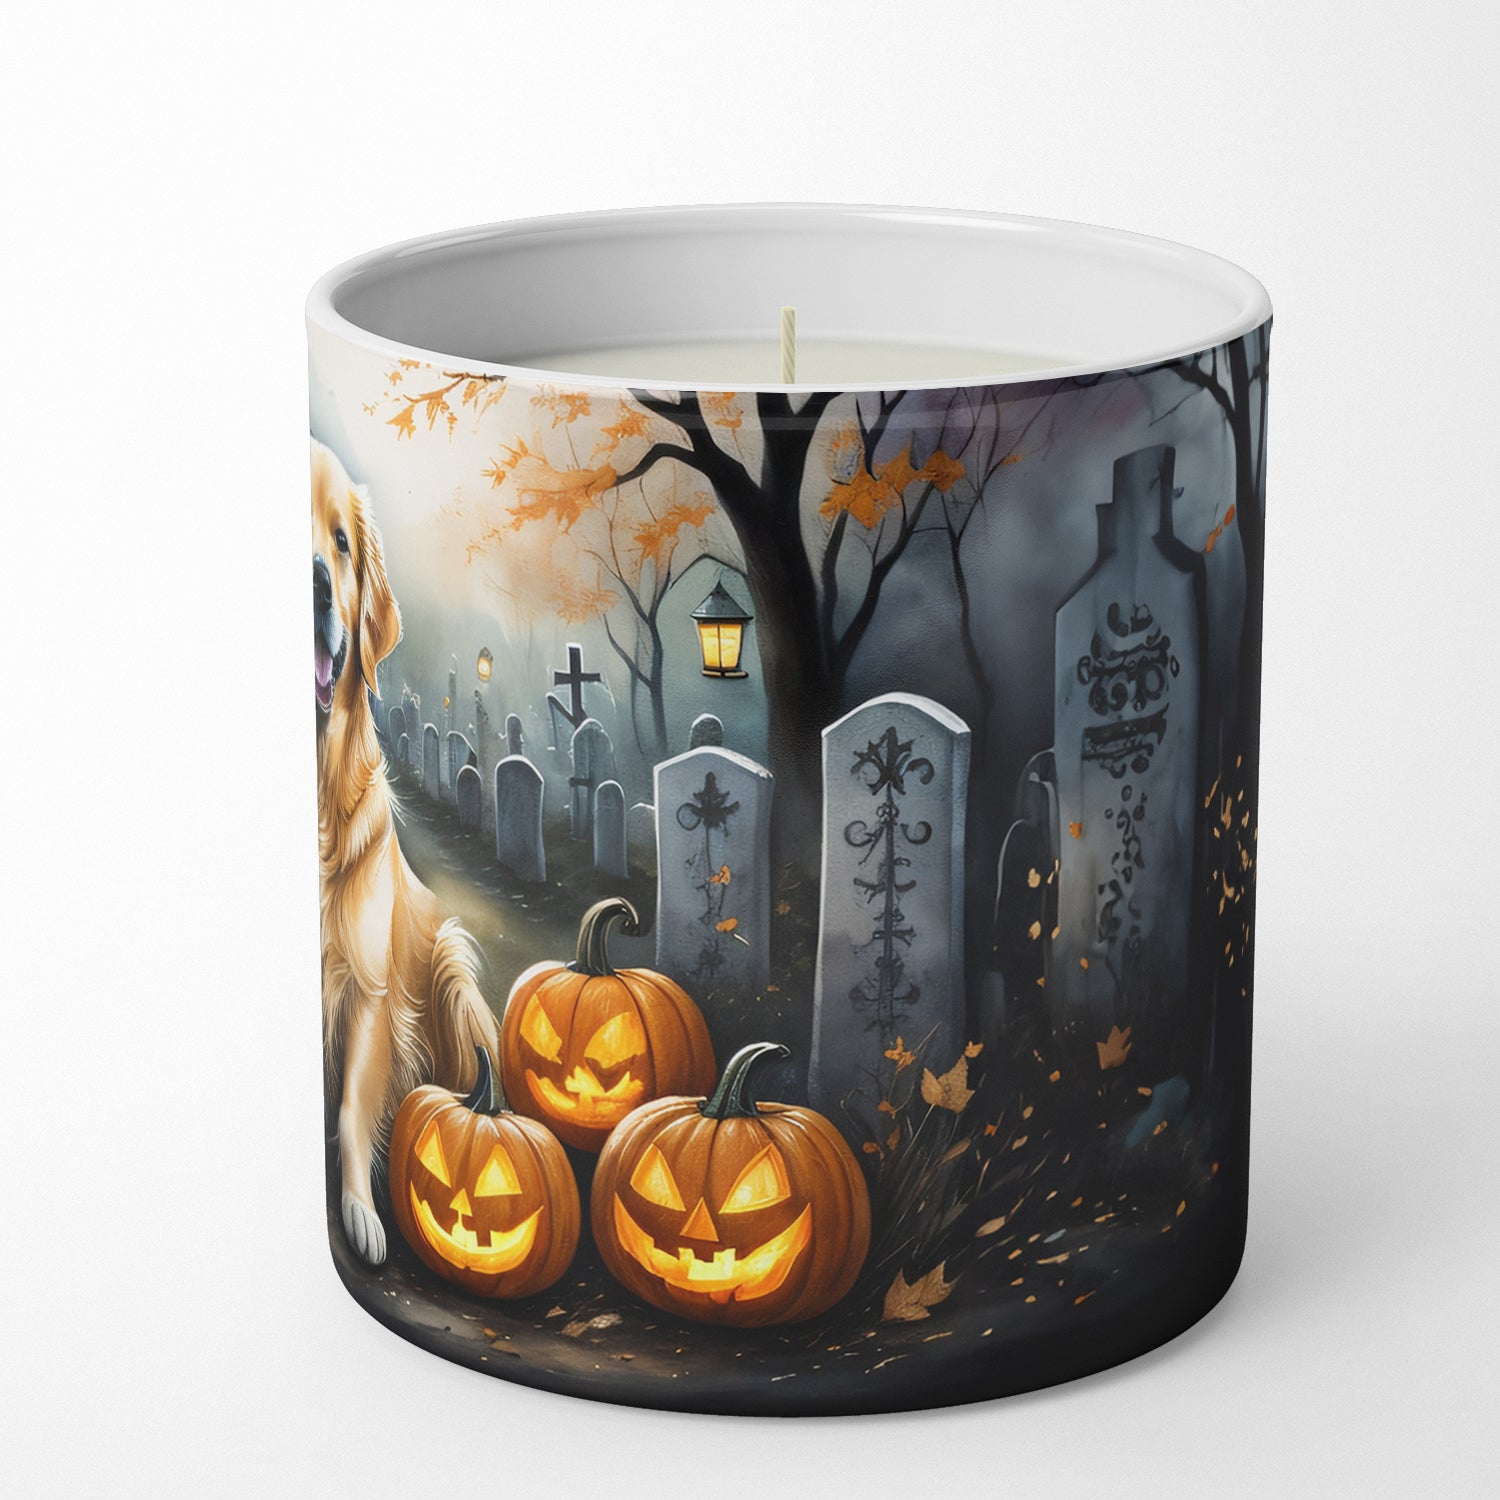 Golden Retriever Spooky Halloween Decorative Soy Candle